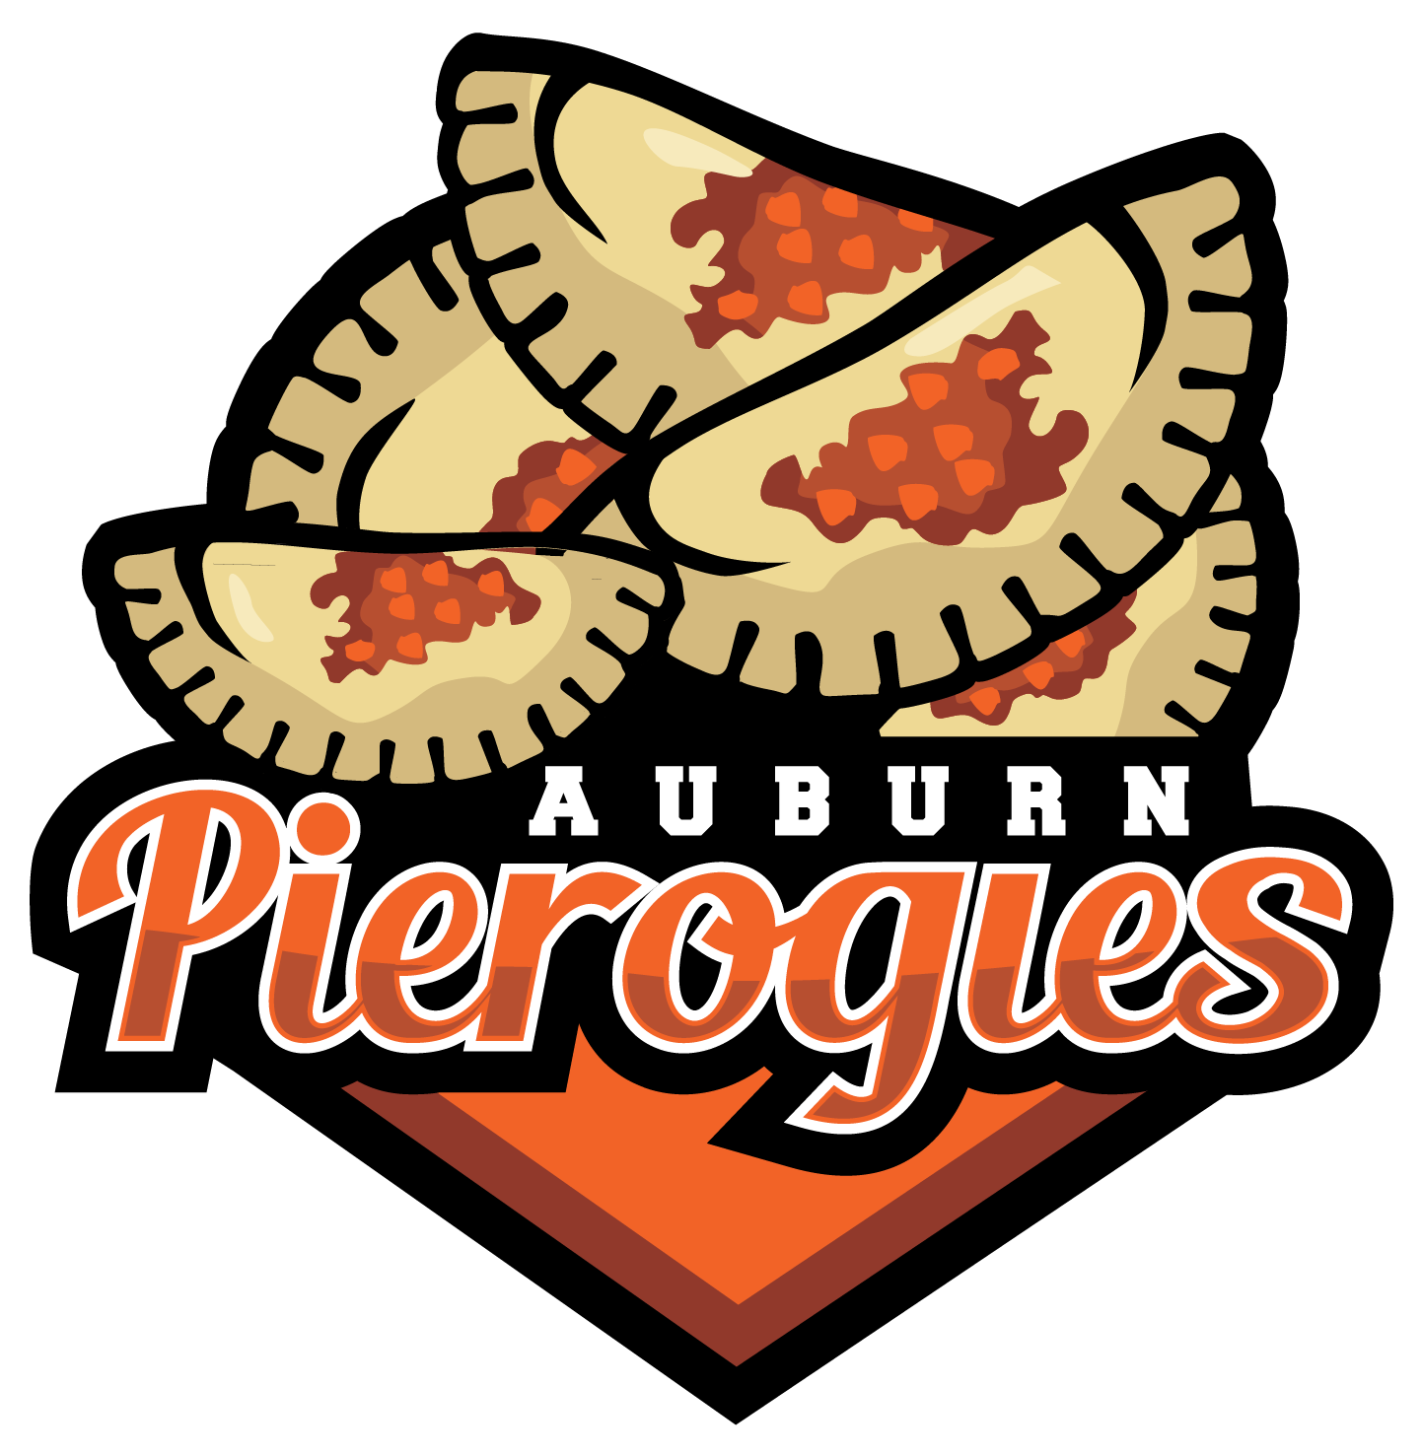 Auburn Pierogies - Pierogi (1422x1456)